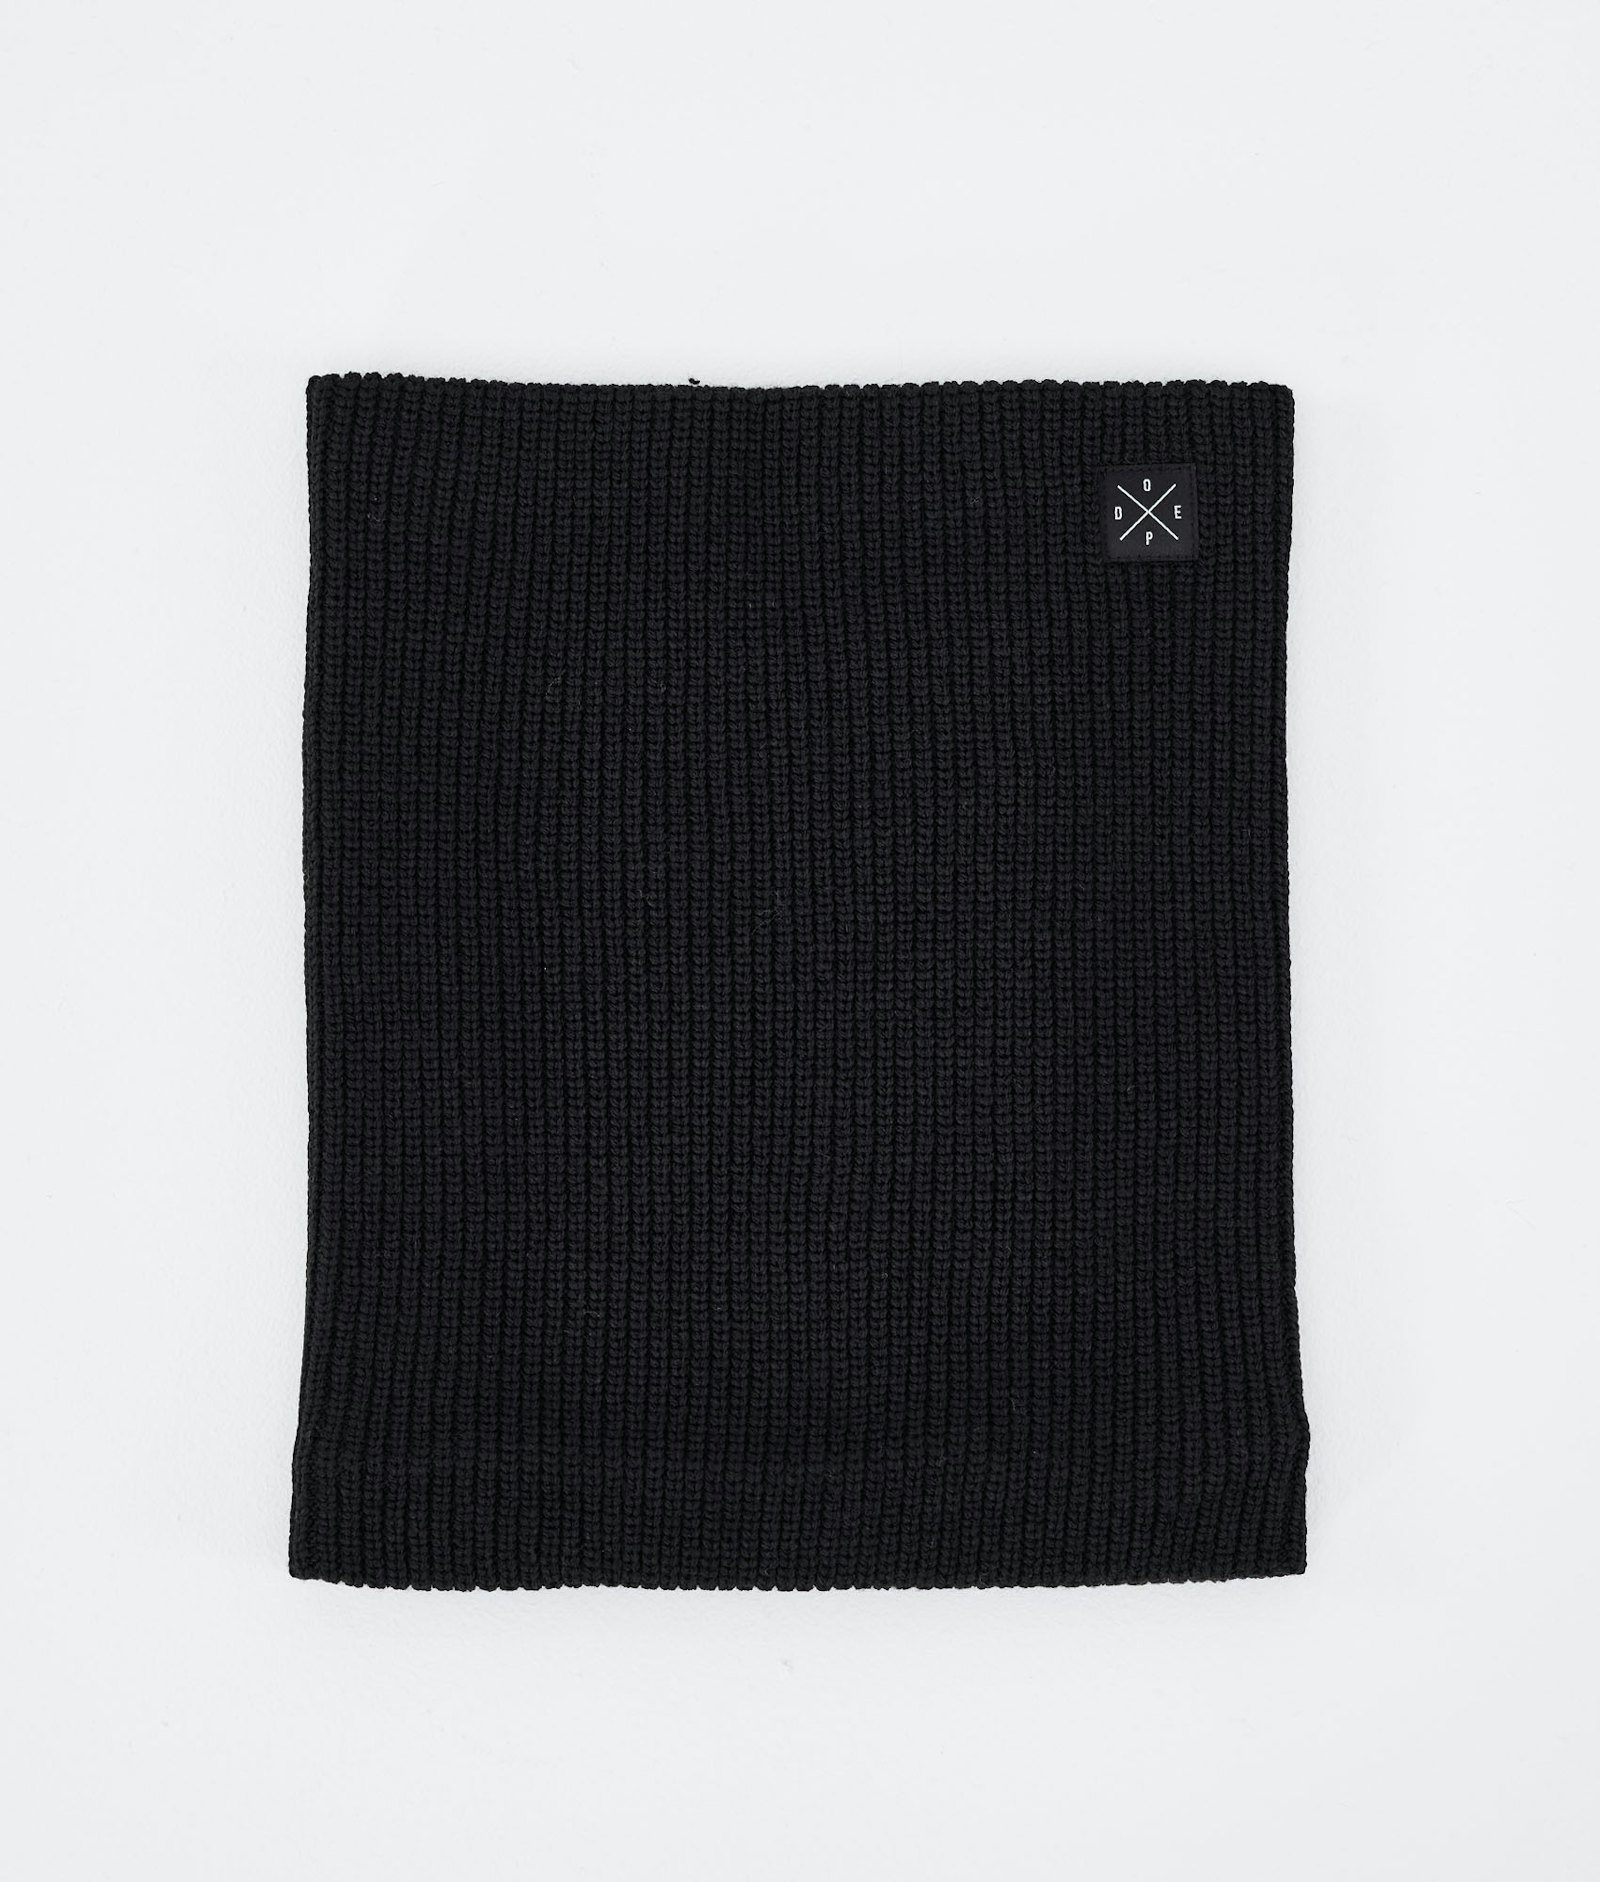 2X-UP Knitted Tour de cou Black